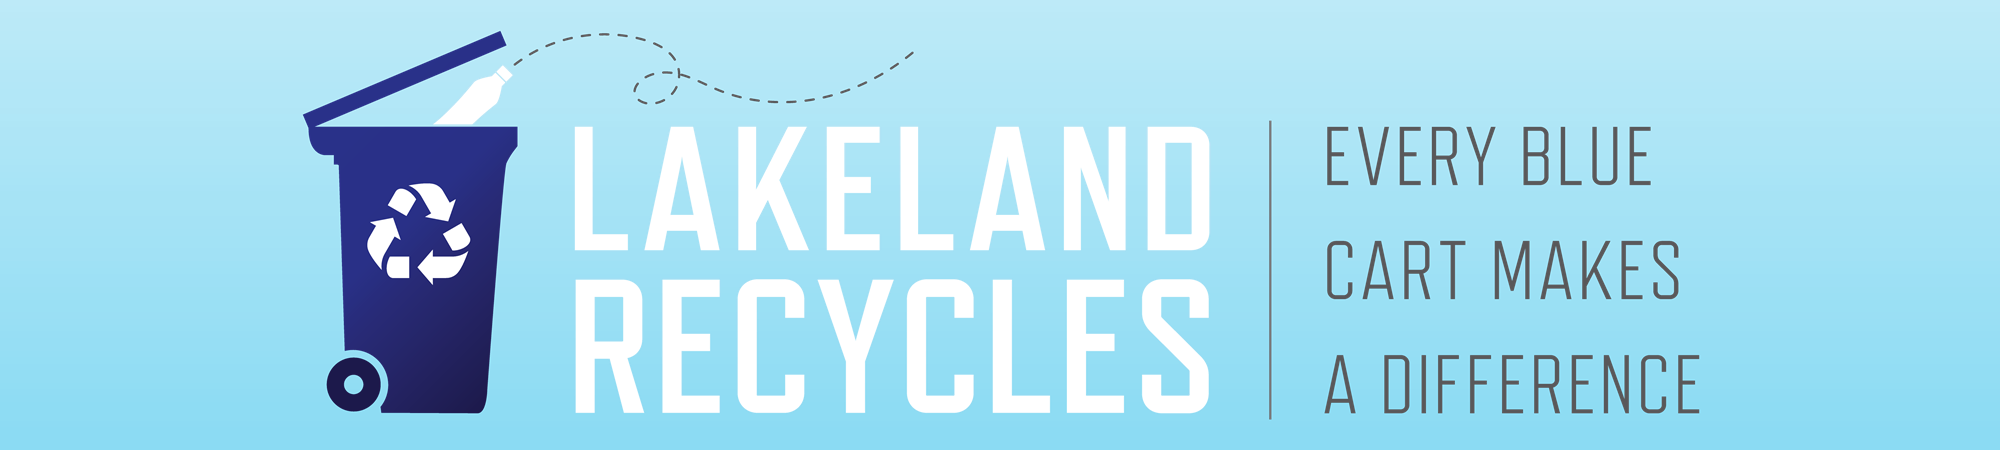 Lakeland Recycles logo